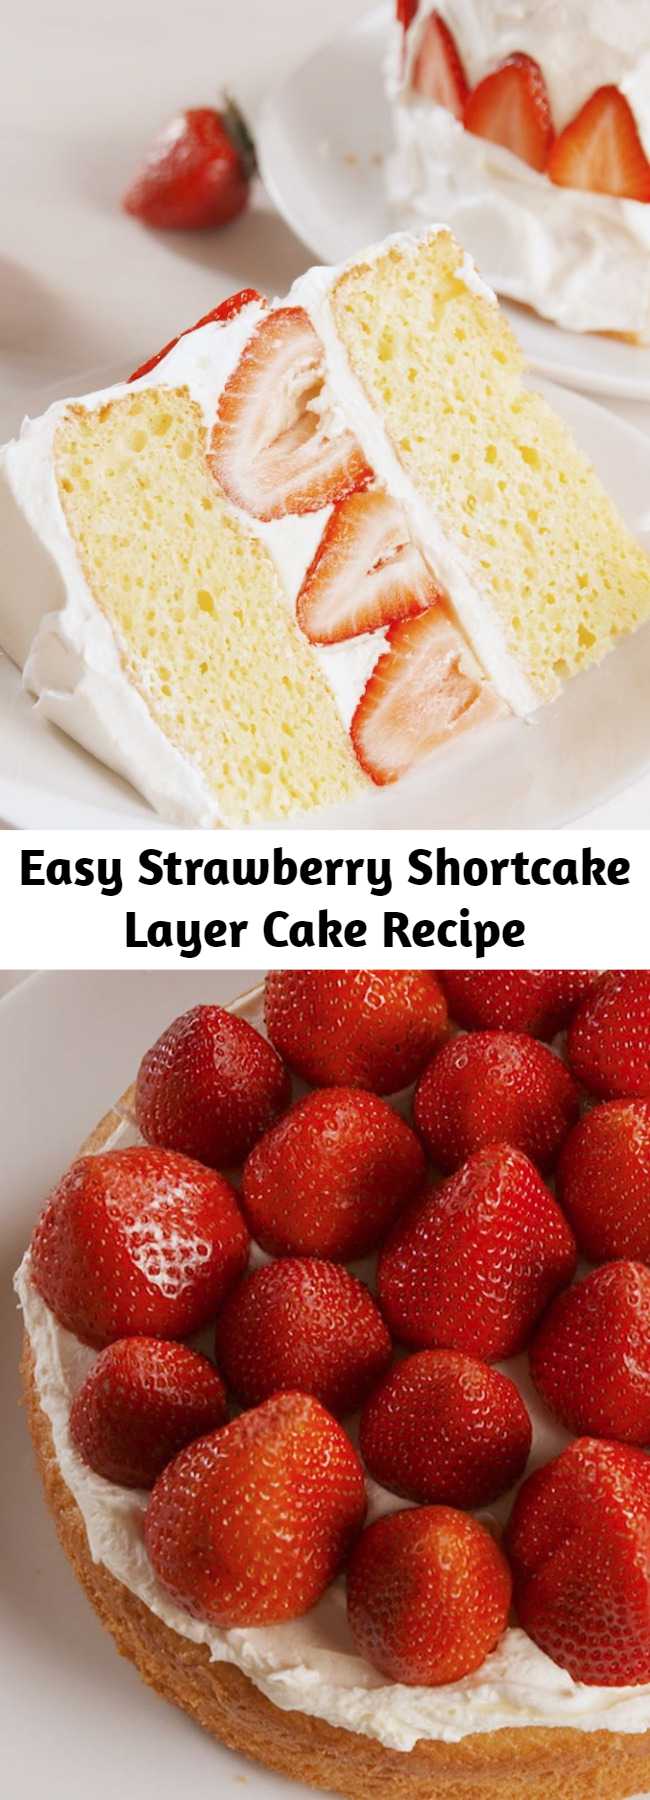 Easy Strawberry Shortcake Layer Cake Recipe - The ultimate strawberry shortcake. It's 100x better than traditional strawberry shortcake. #food #easycake #cake #strawberry #dessert